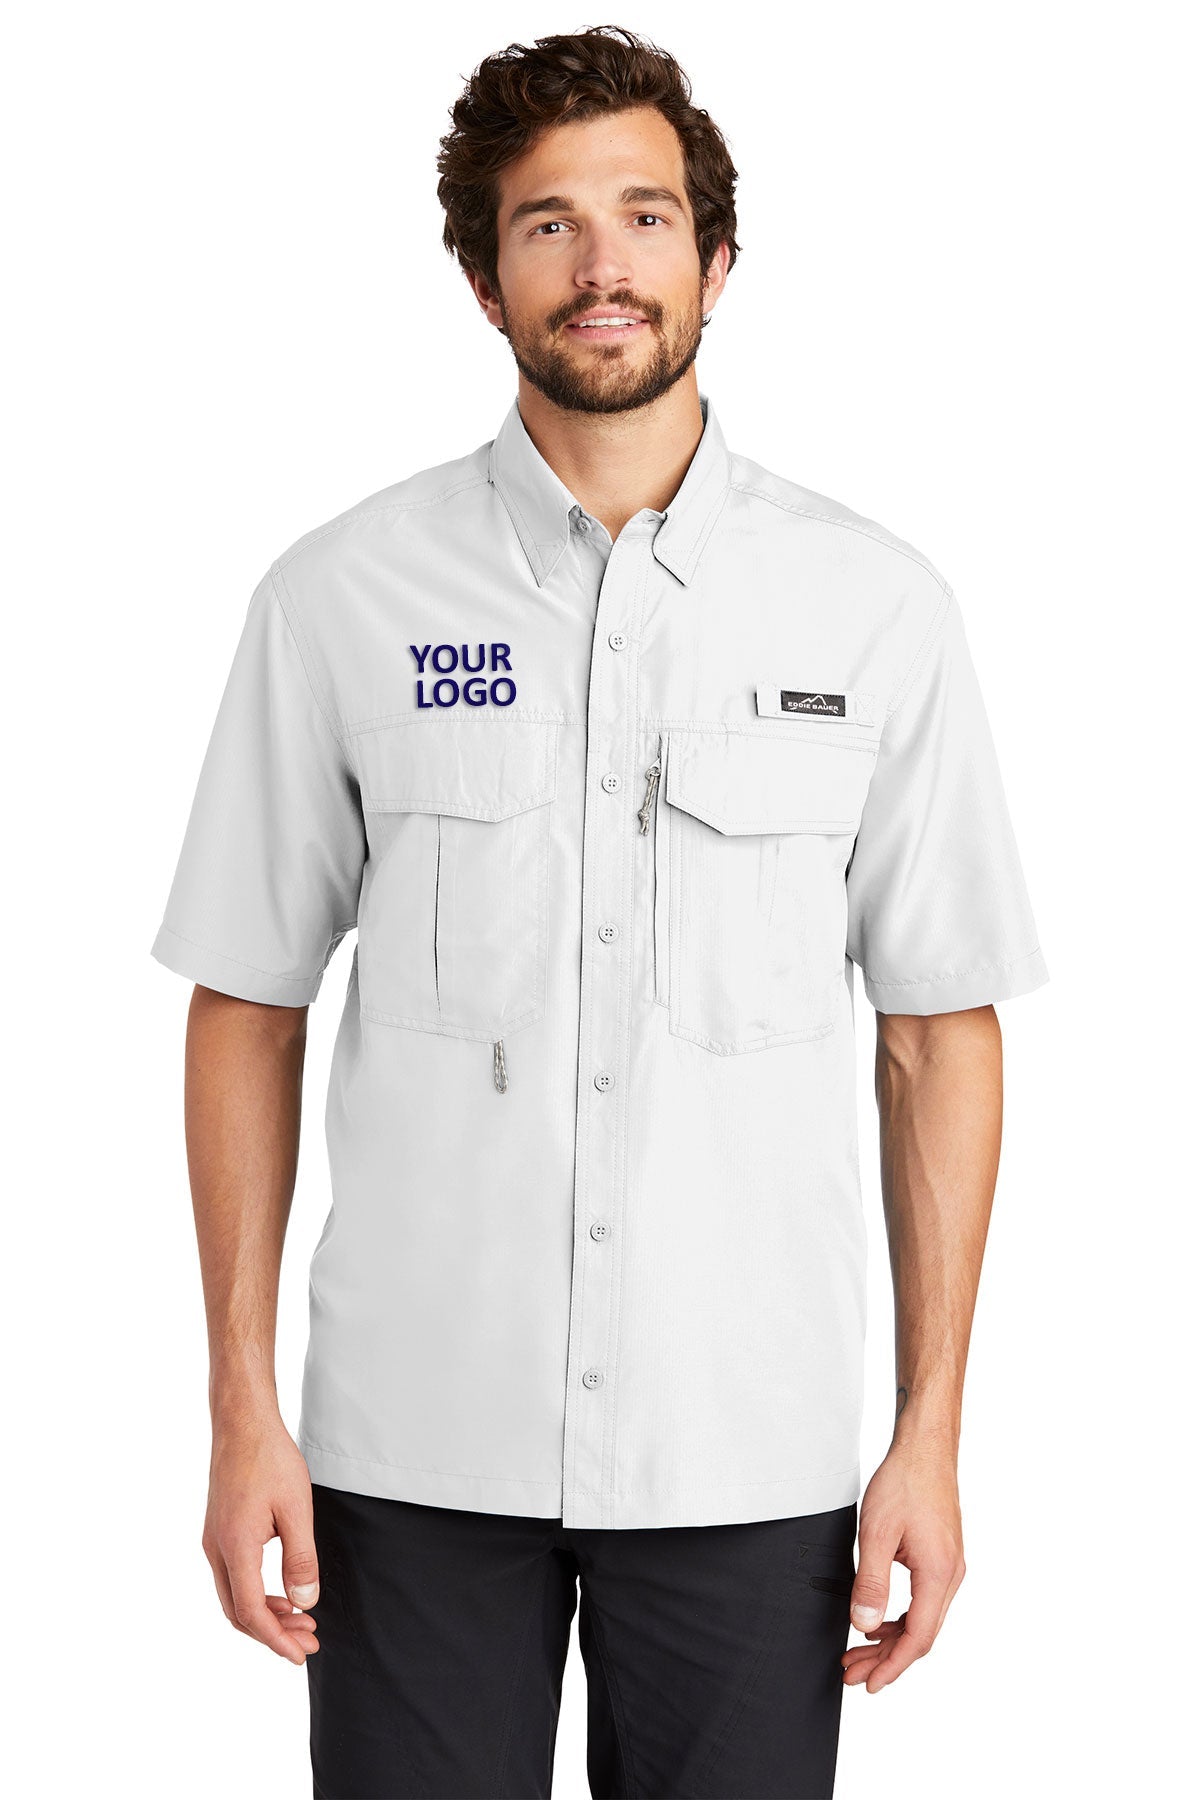 Eddie Bauer Short Sleeve Performance Branded Fishing Shirts, White